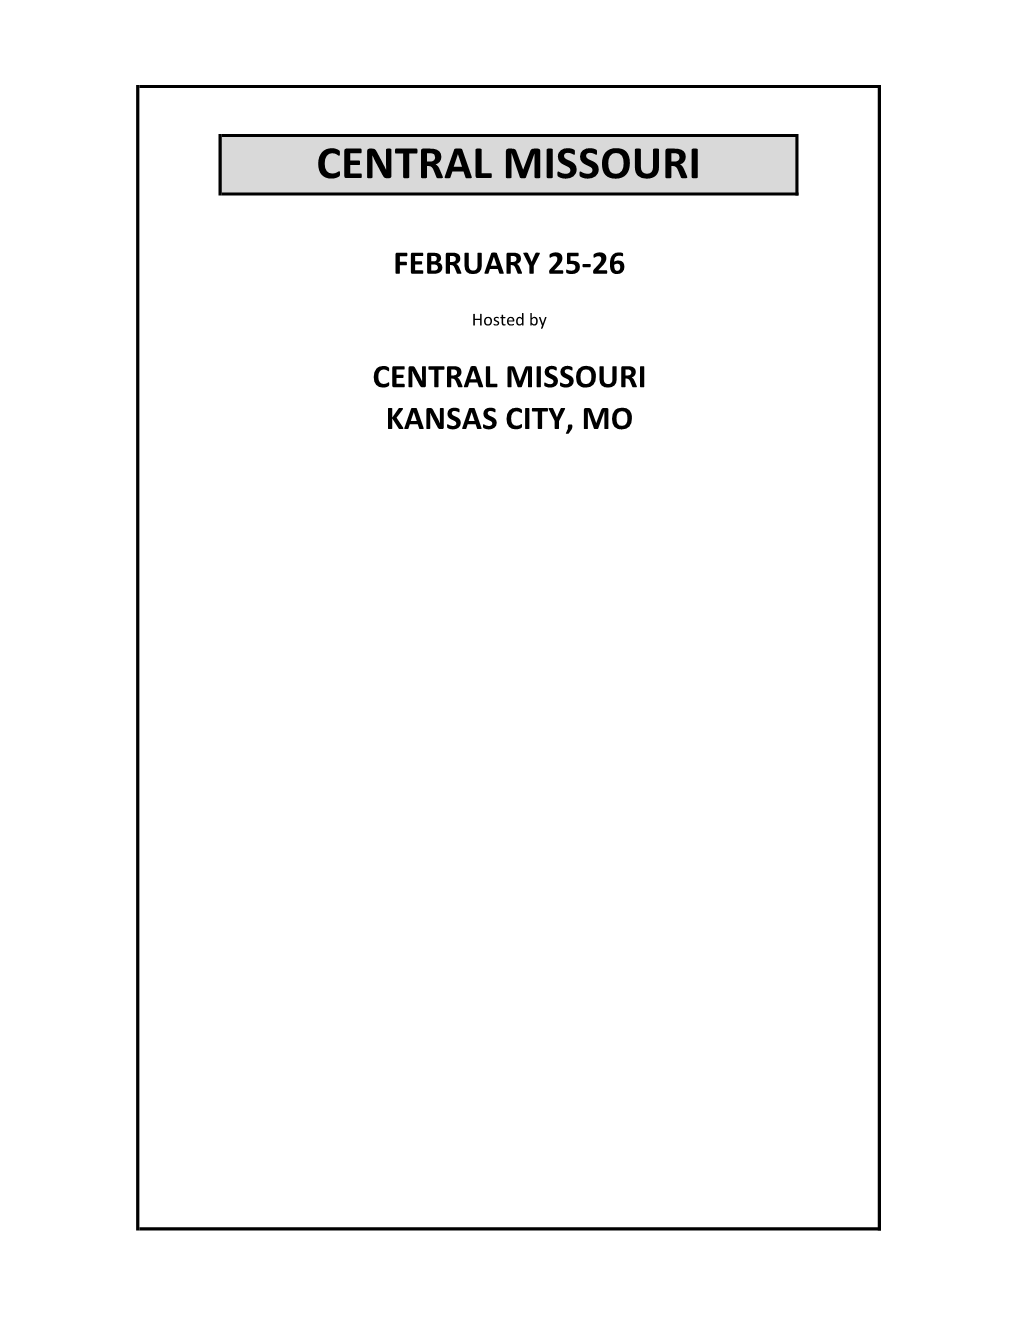 Central Missouri